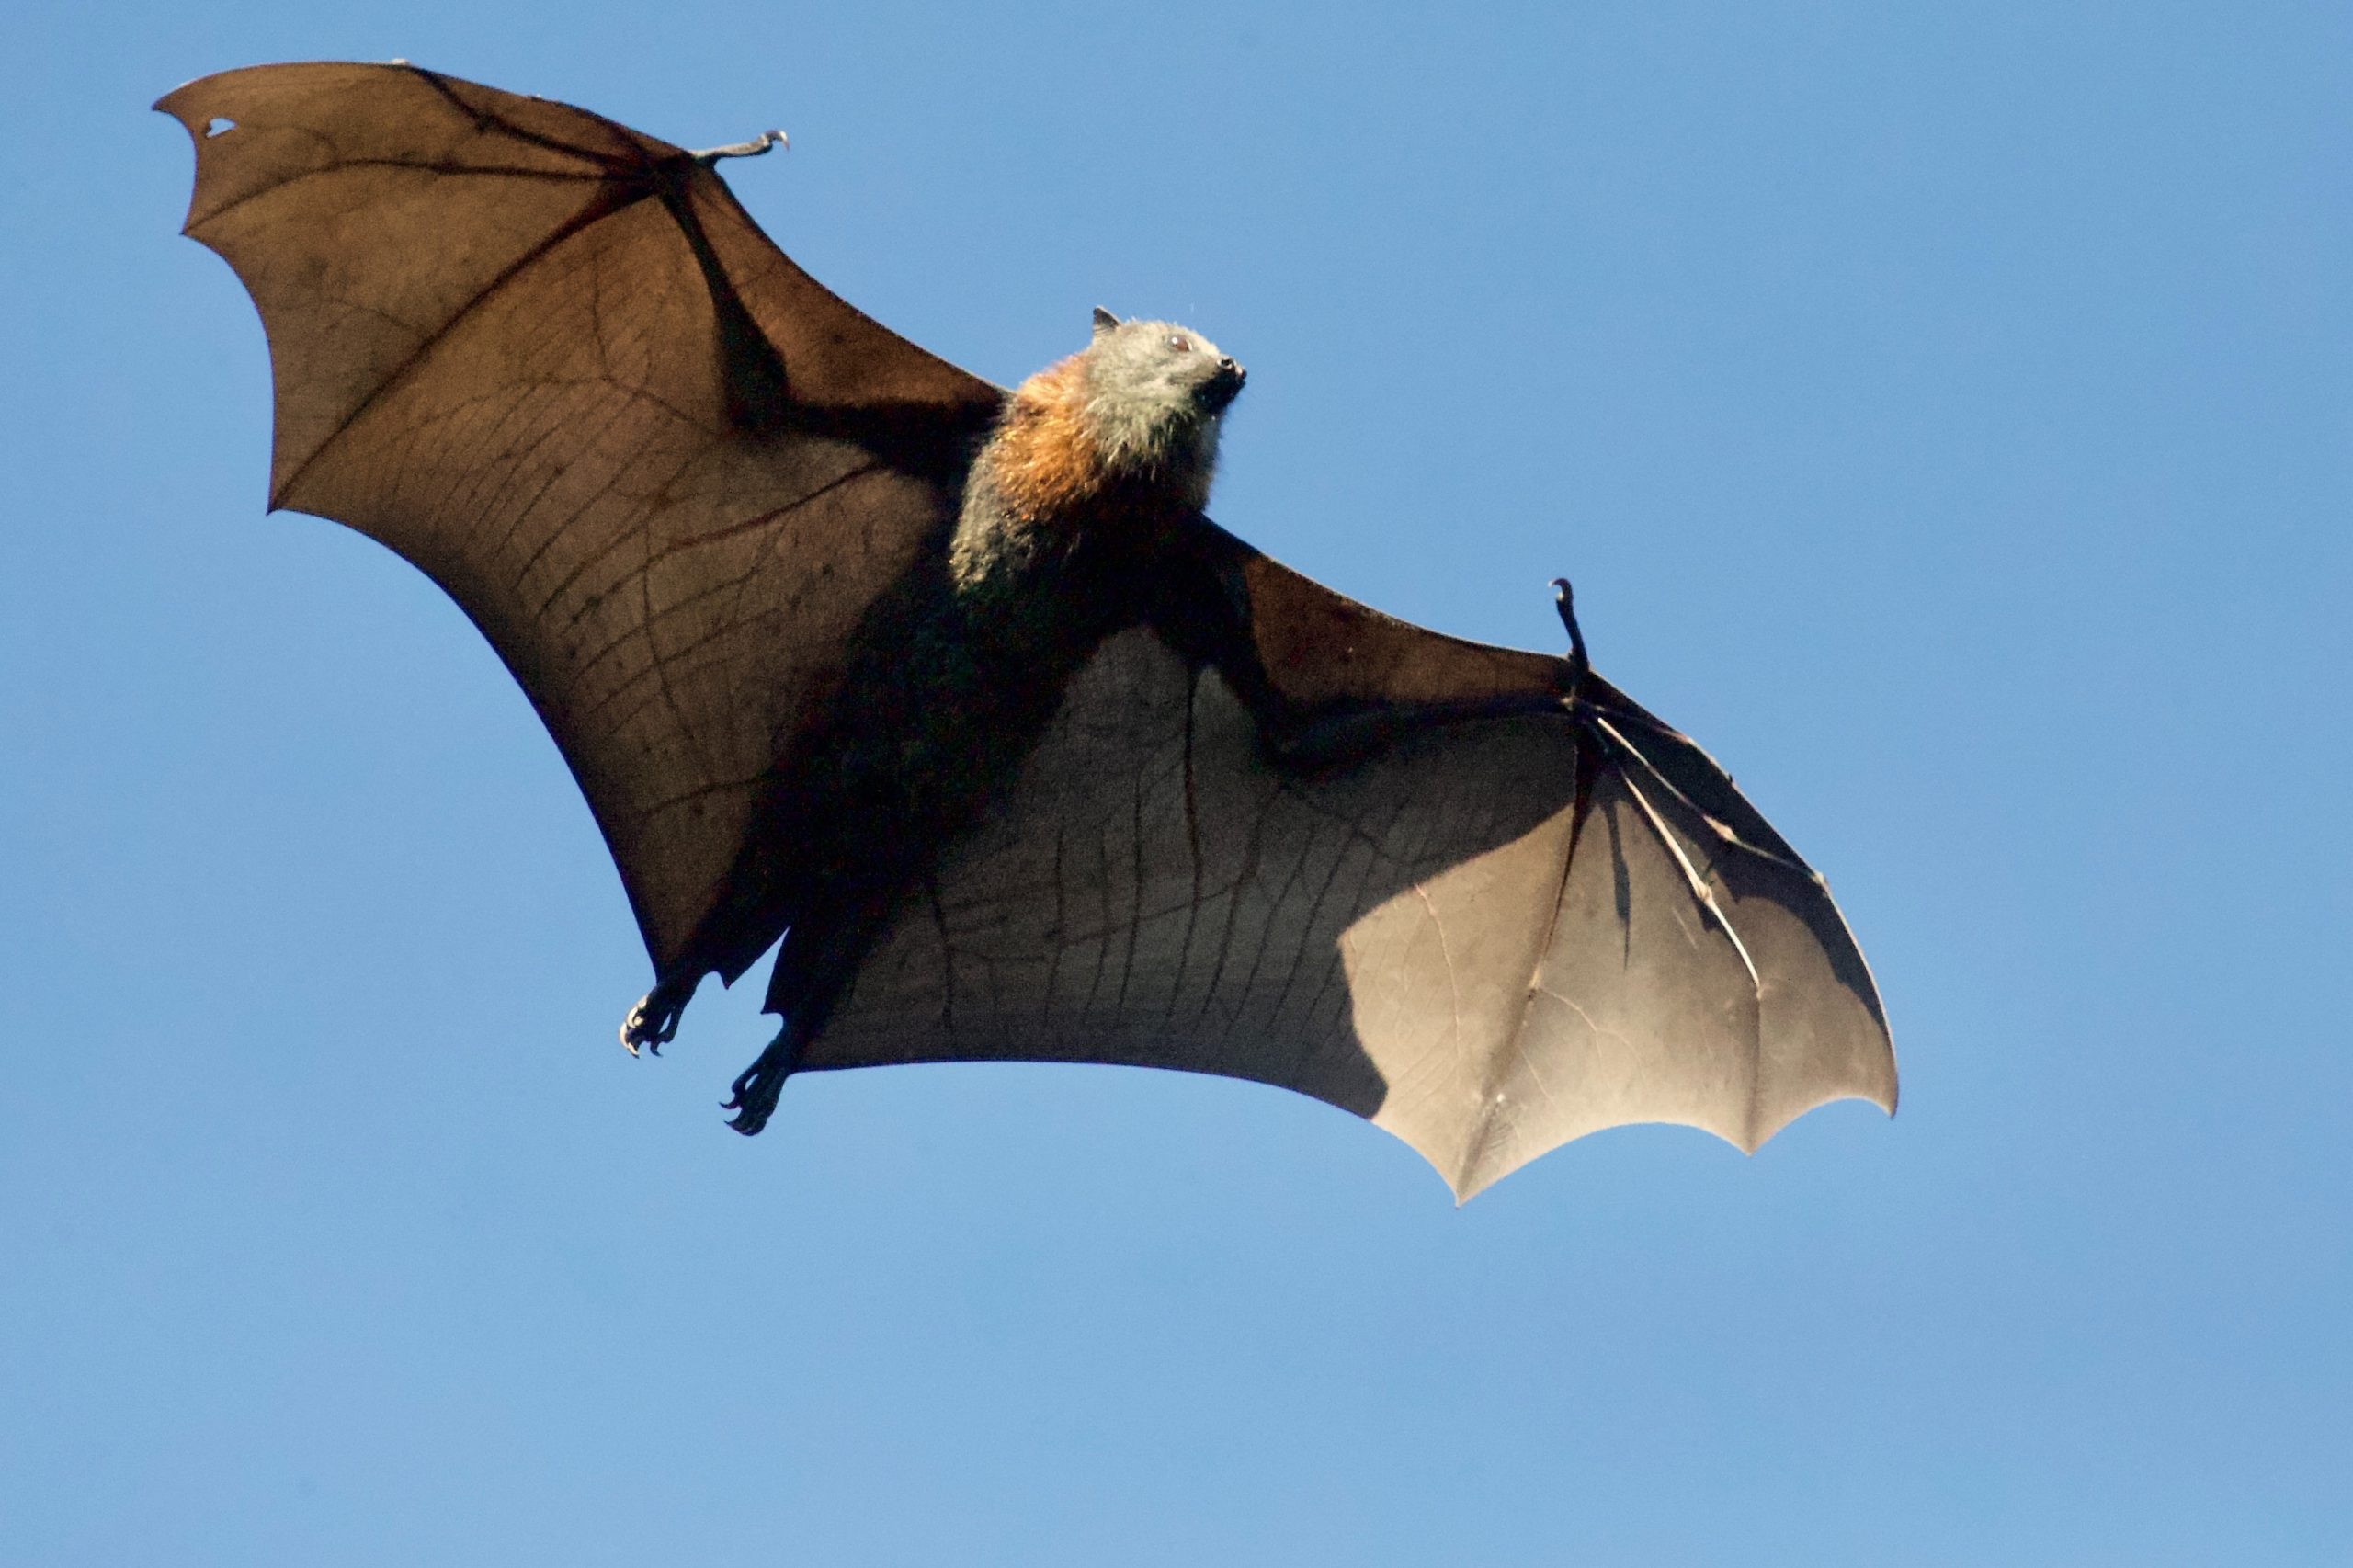 Happy Bat Week! Honoring Our Favorite “Spooky” Mammals